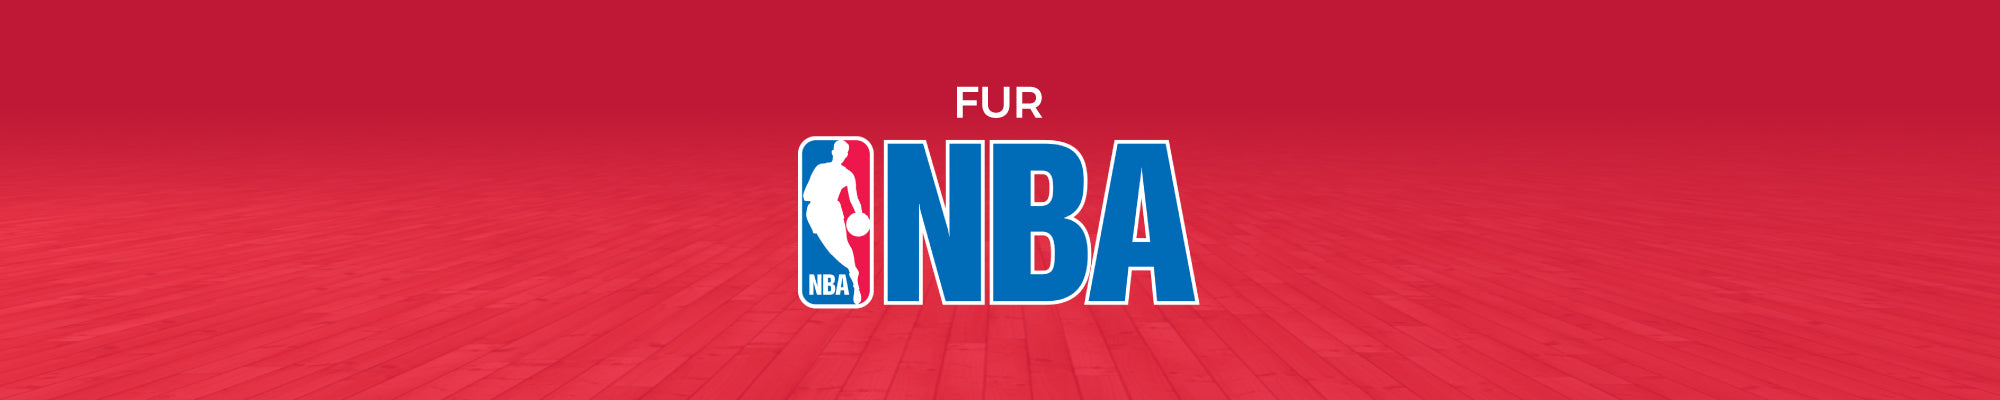 NBA Fur